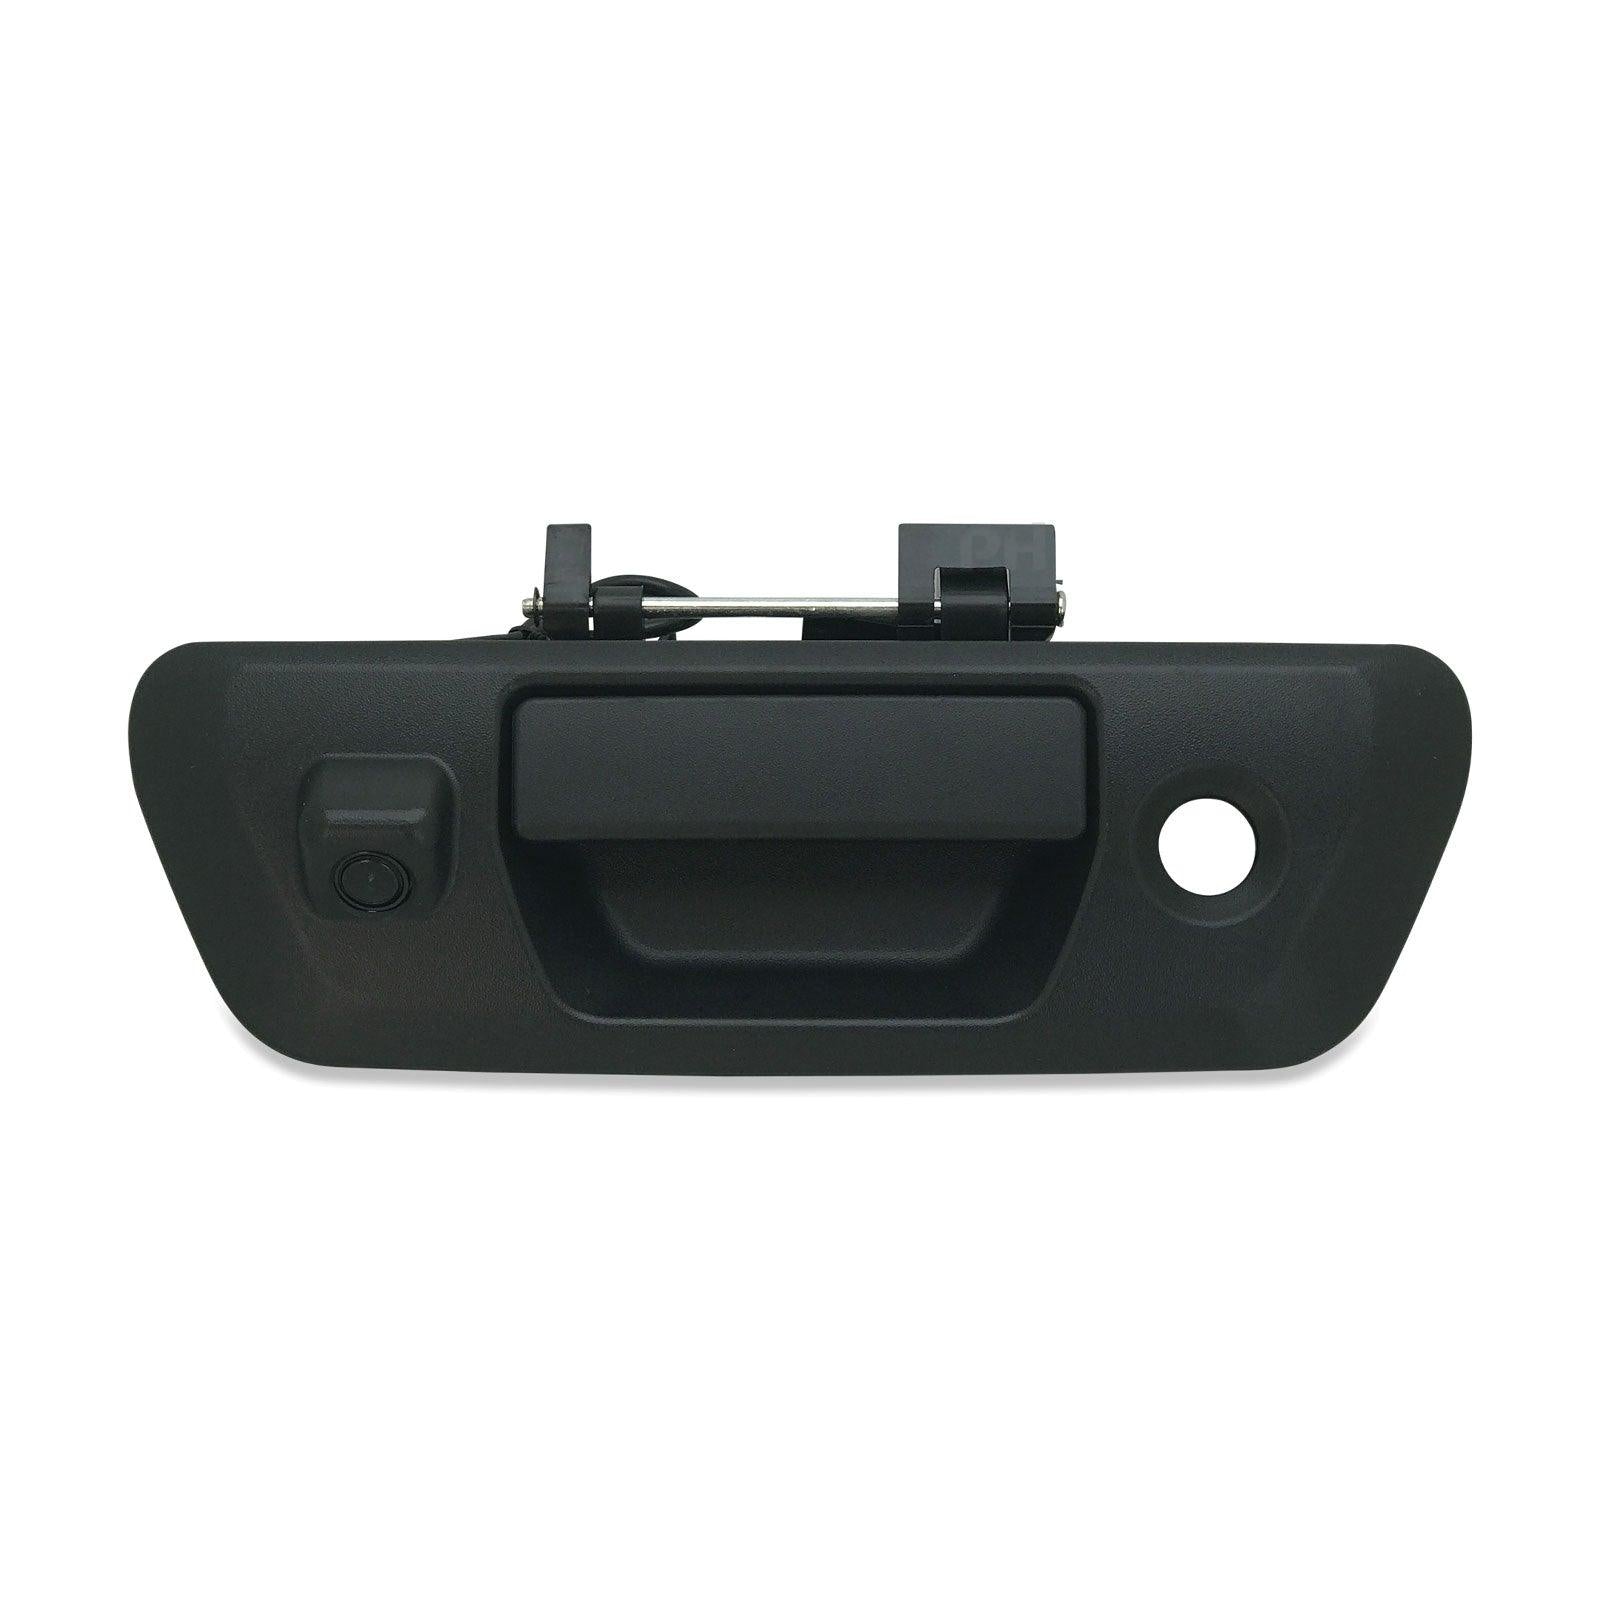 Tailgate Handle BLACK with Reverse Camera fits Nissan Navara NP300 D23 - 4X4OC™